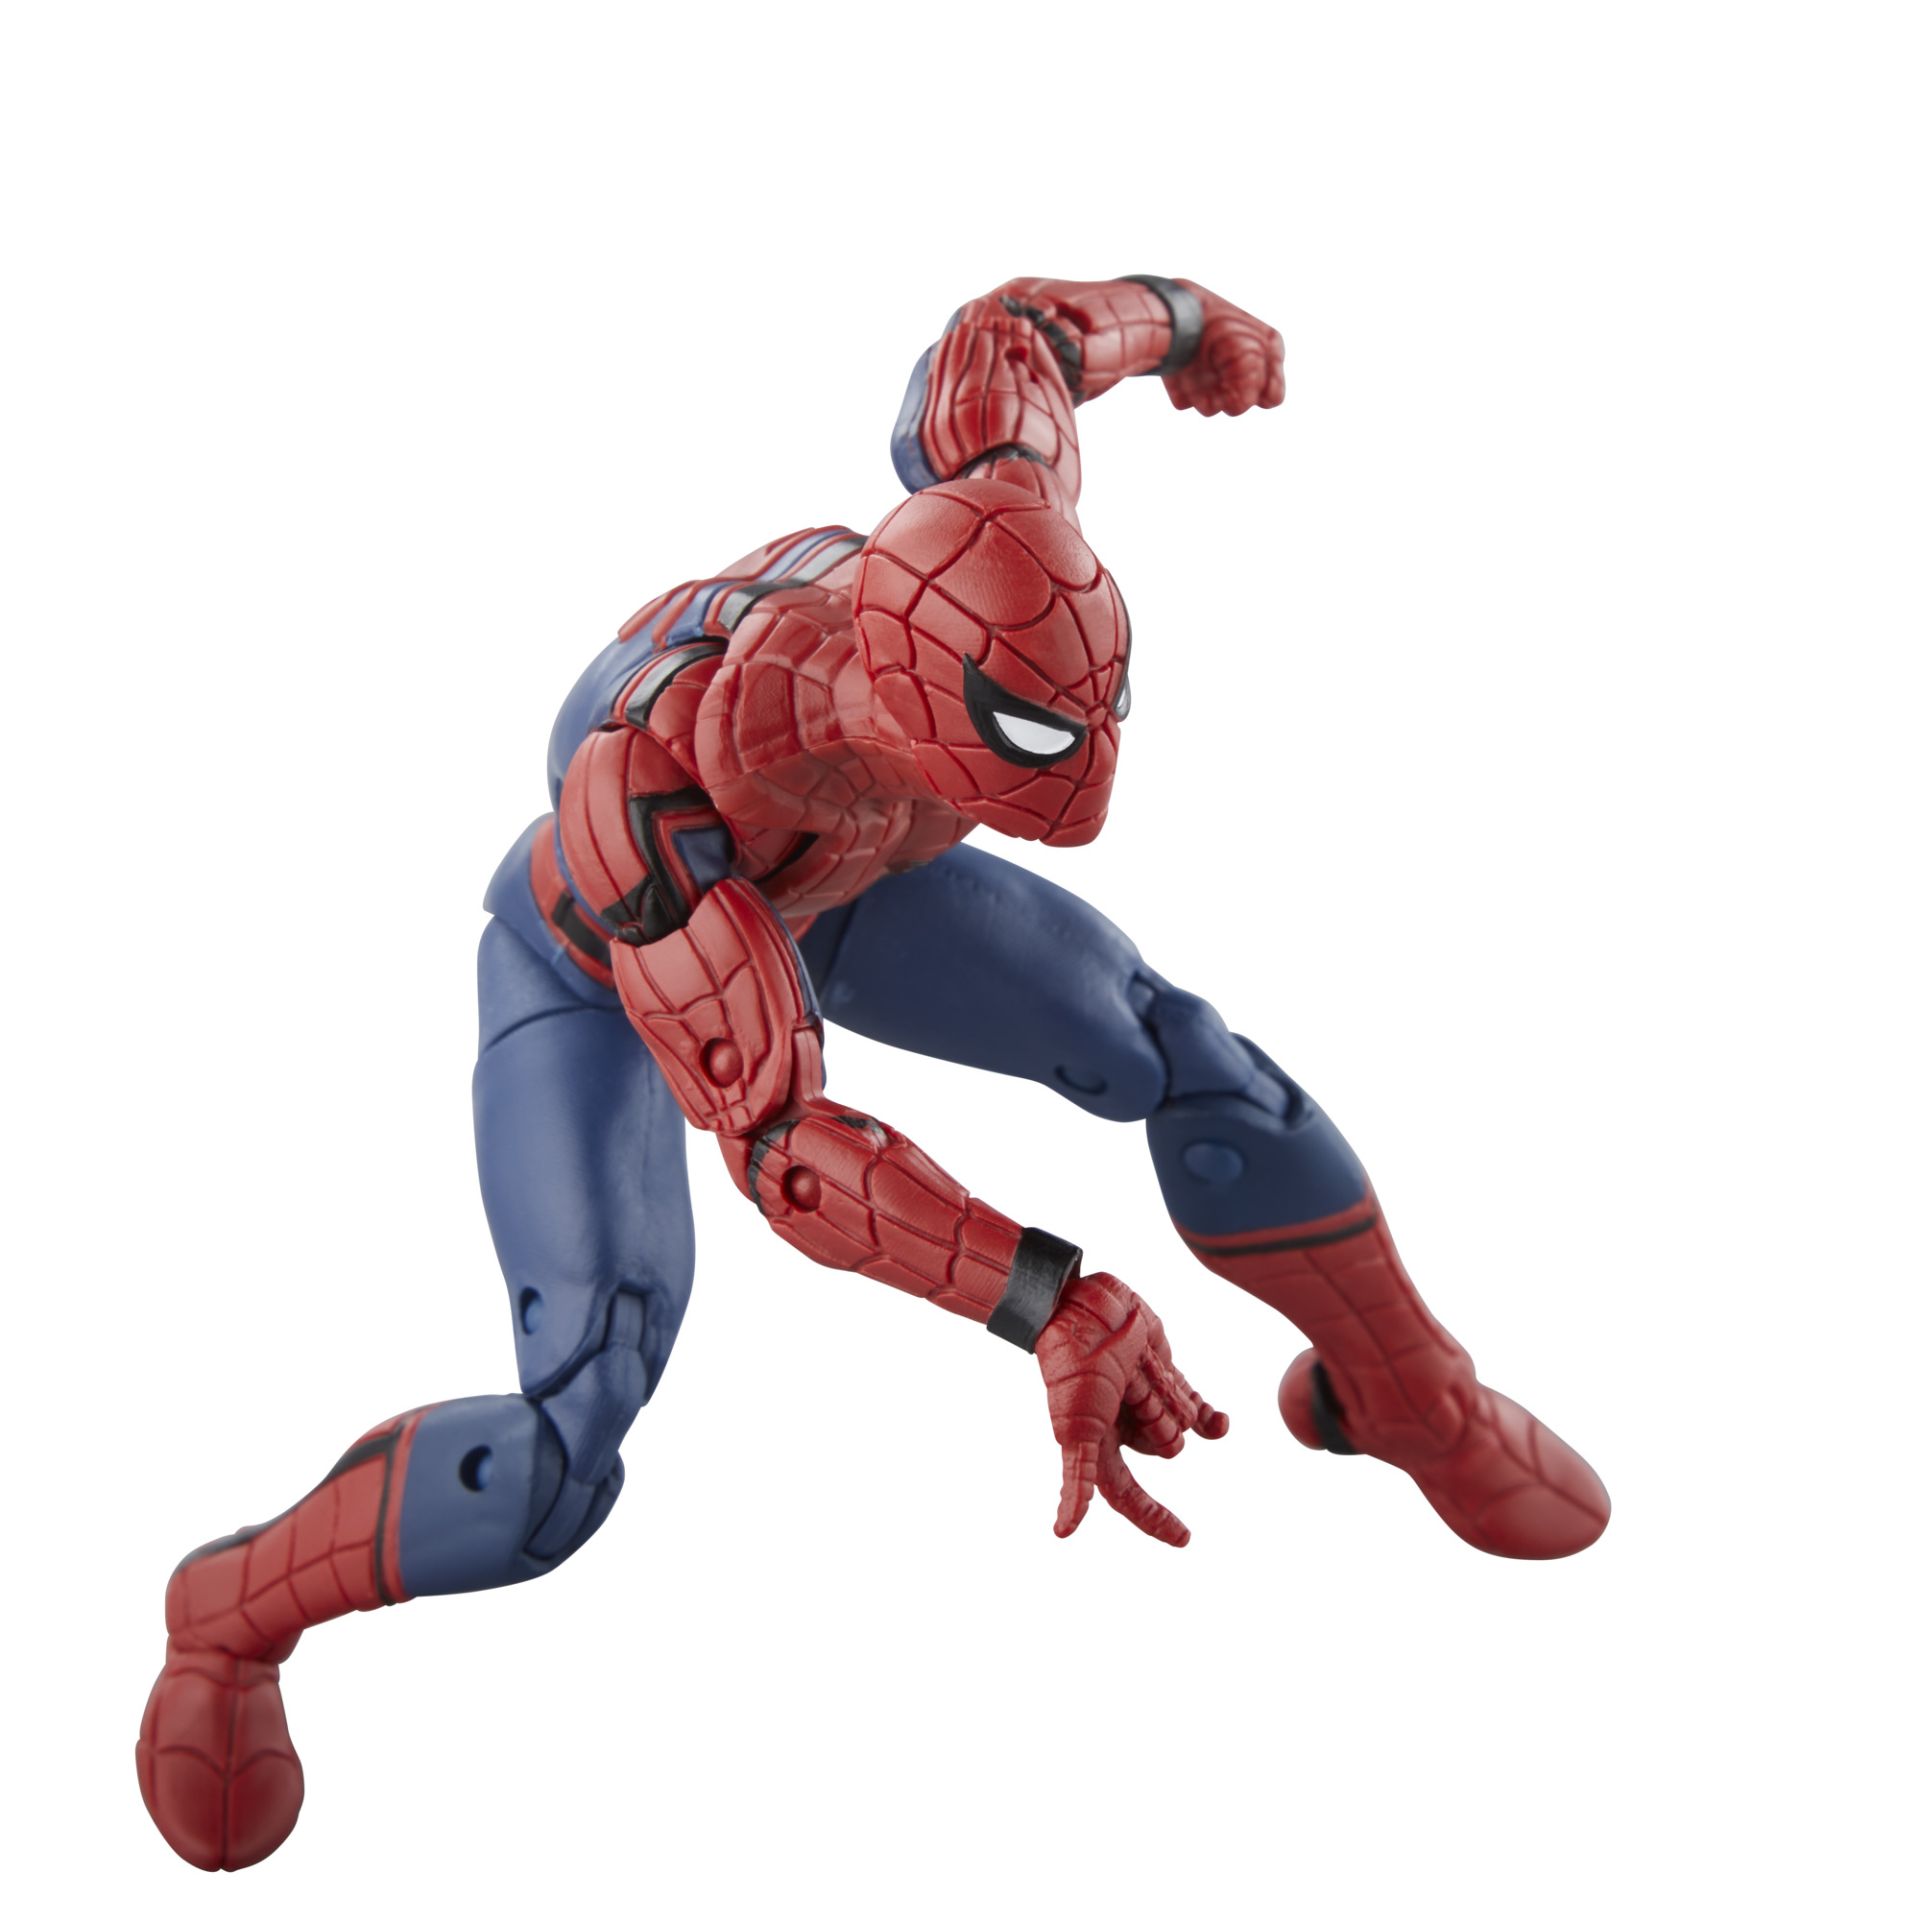 Captain America: Civil War Marvel Legends Spider-Man 6-Inch Action